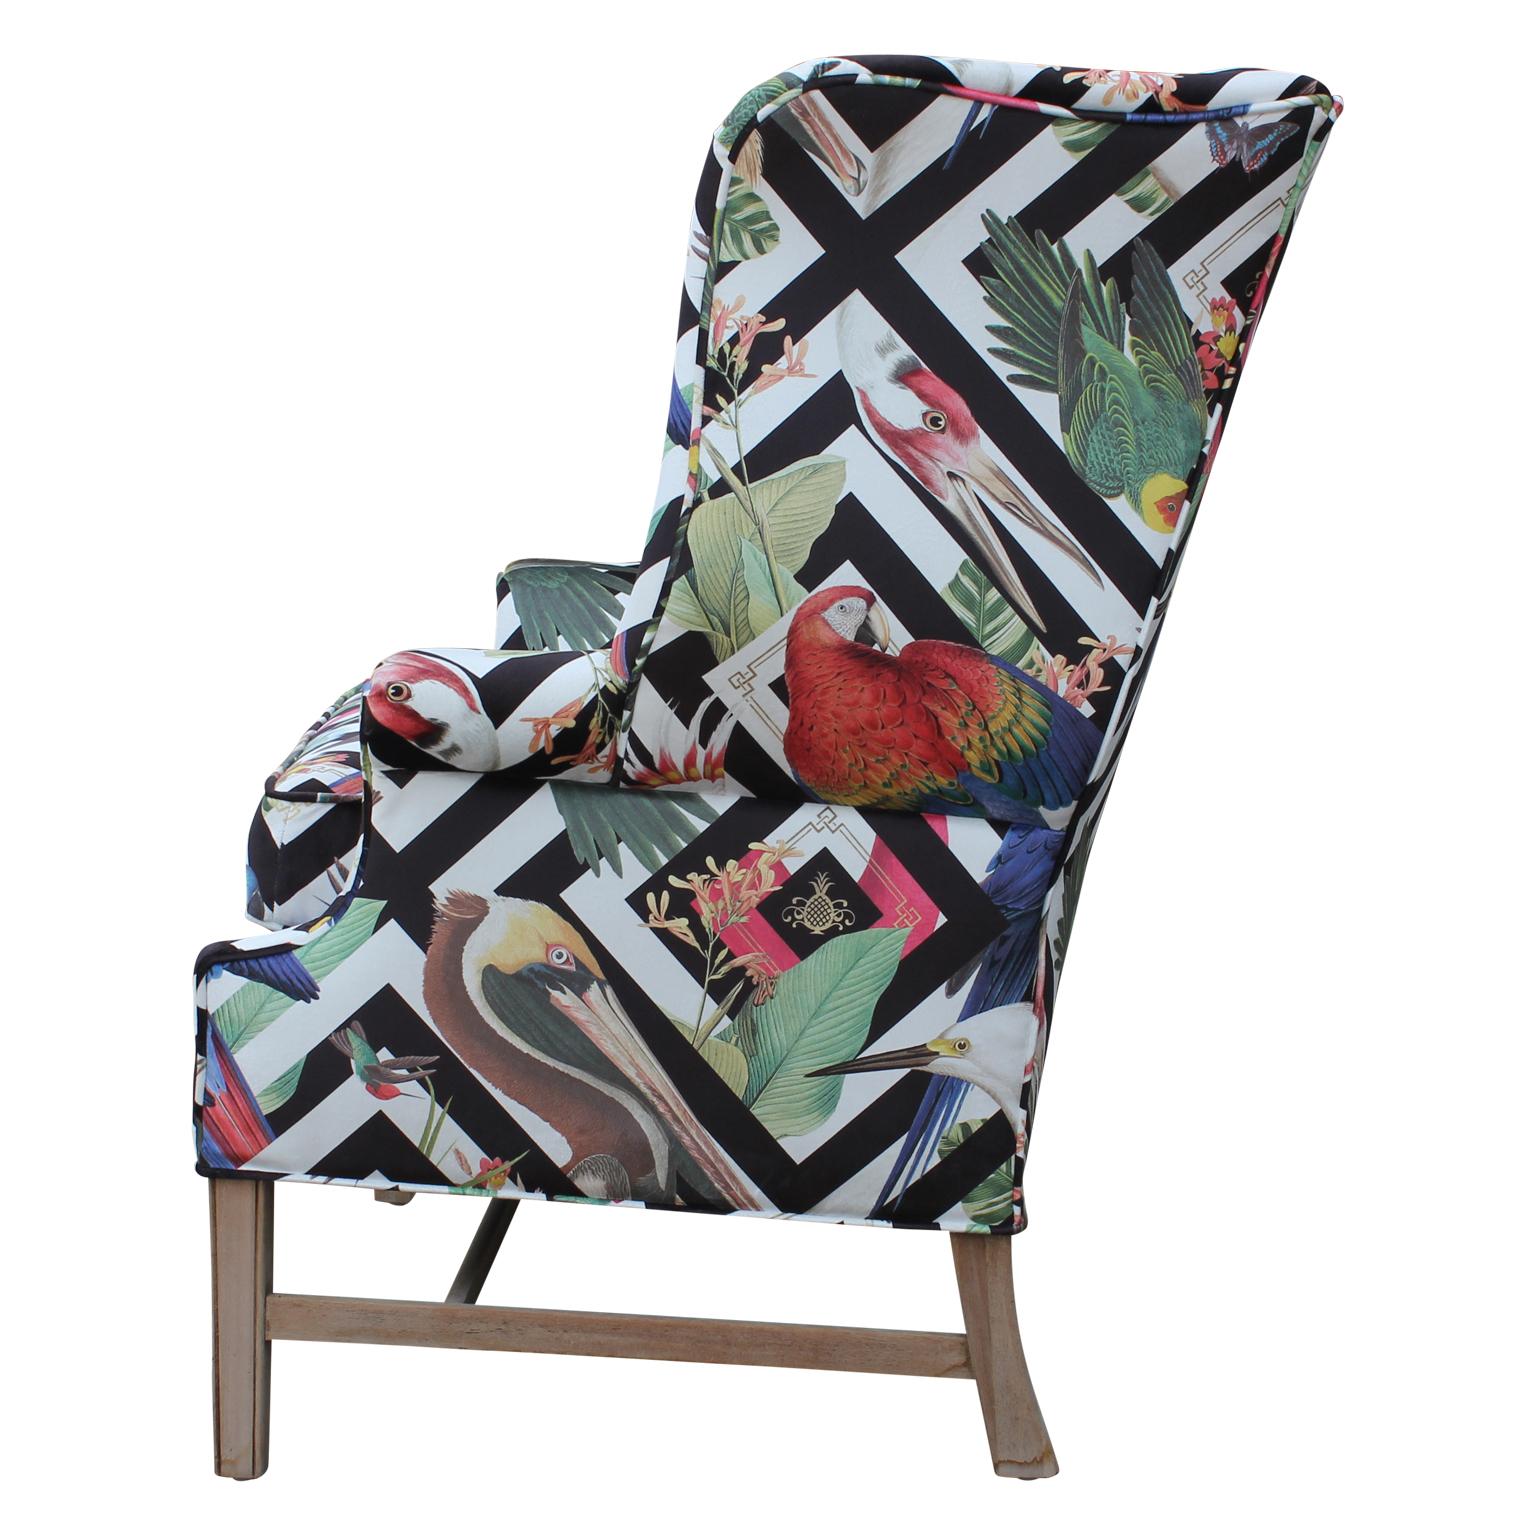 chairs with bird print fabric